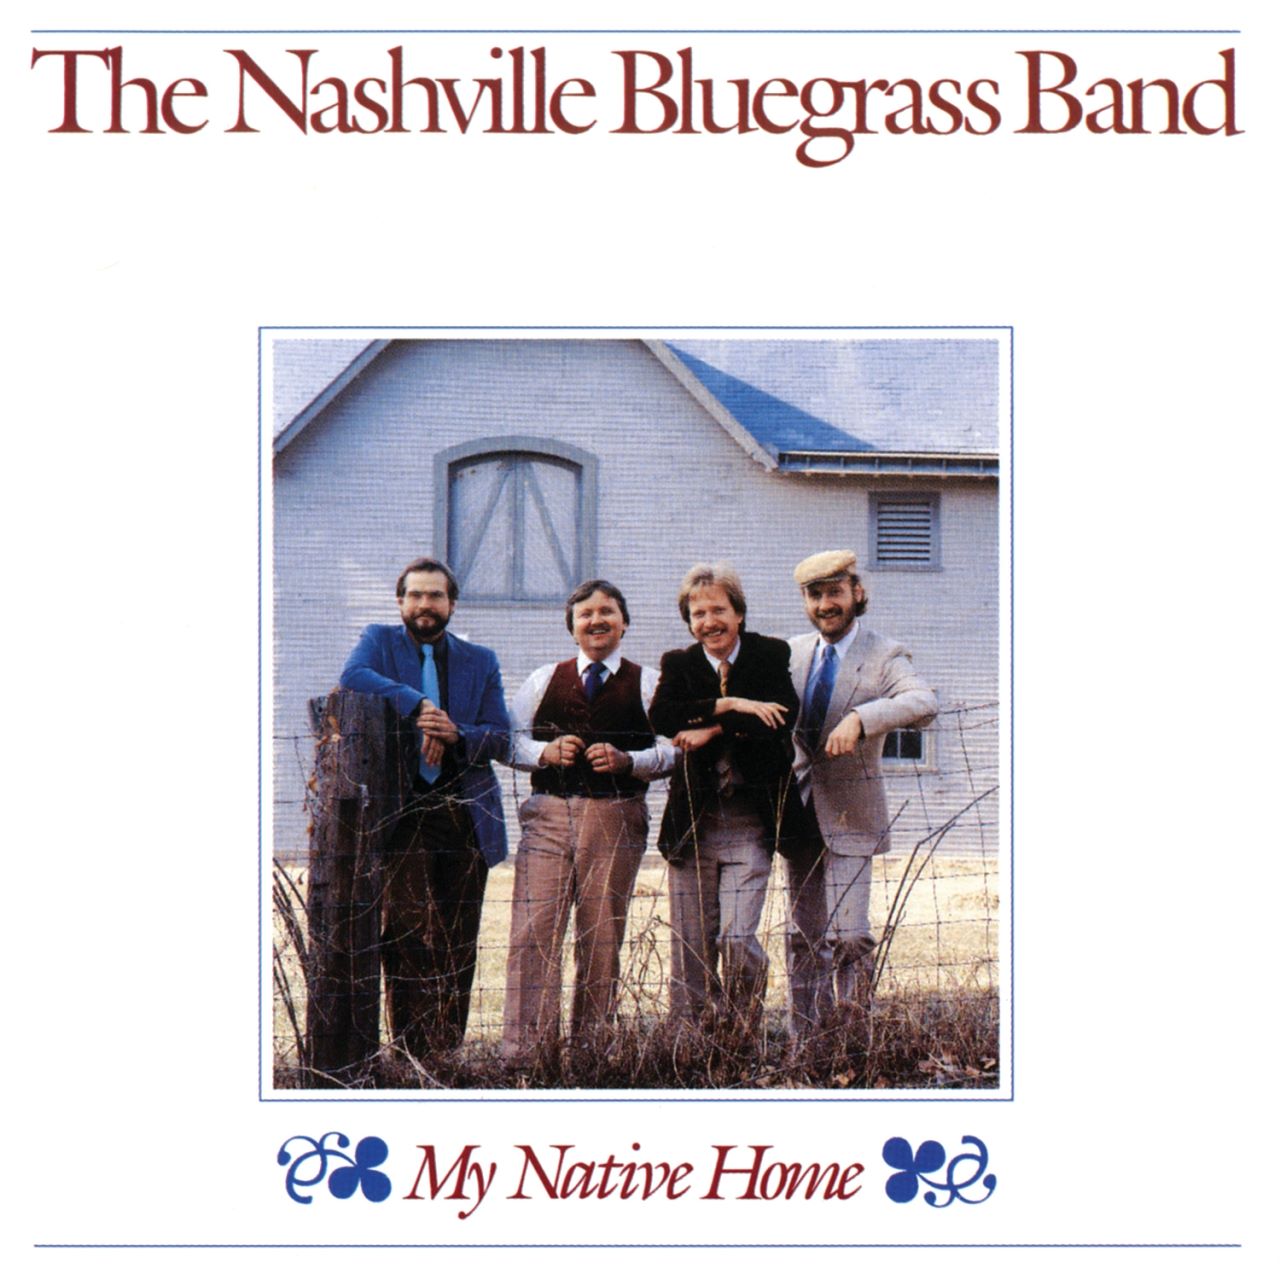 Nashville Bluegrass Band - My Native Home cover album